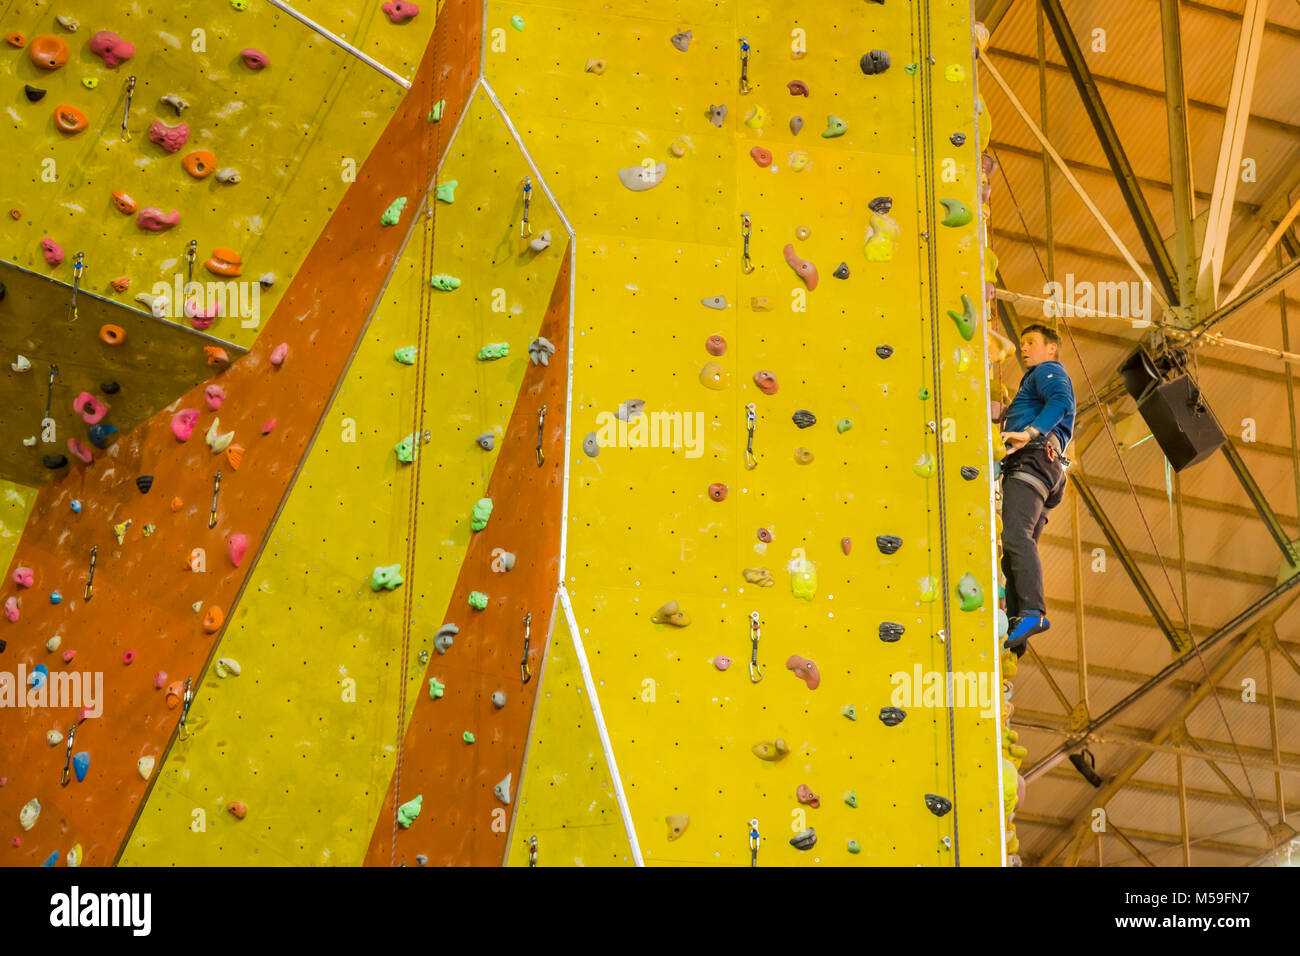 Hombre en una pared de escalada dentro de un centro de actividades, Calshot Calshot, REINO UNIDO Foto de stock